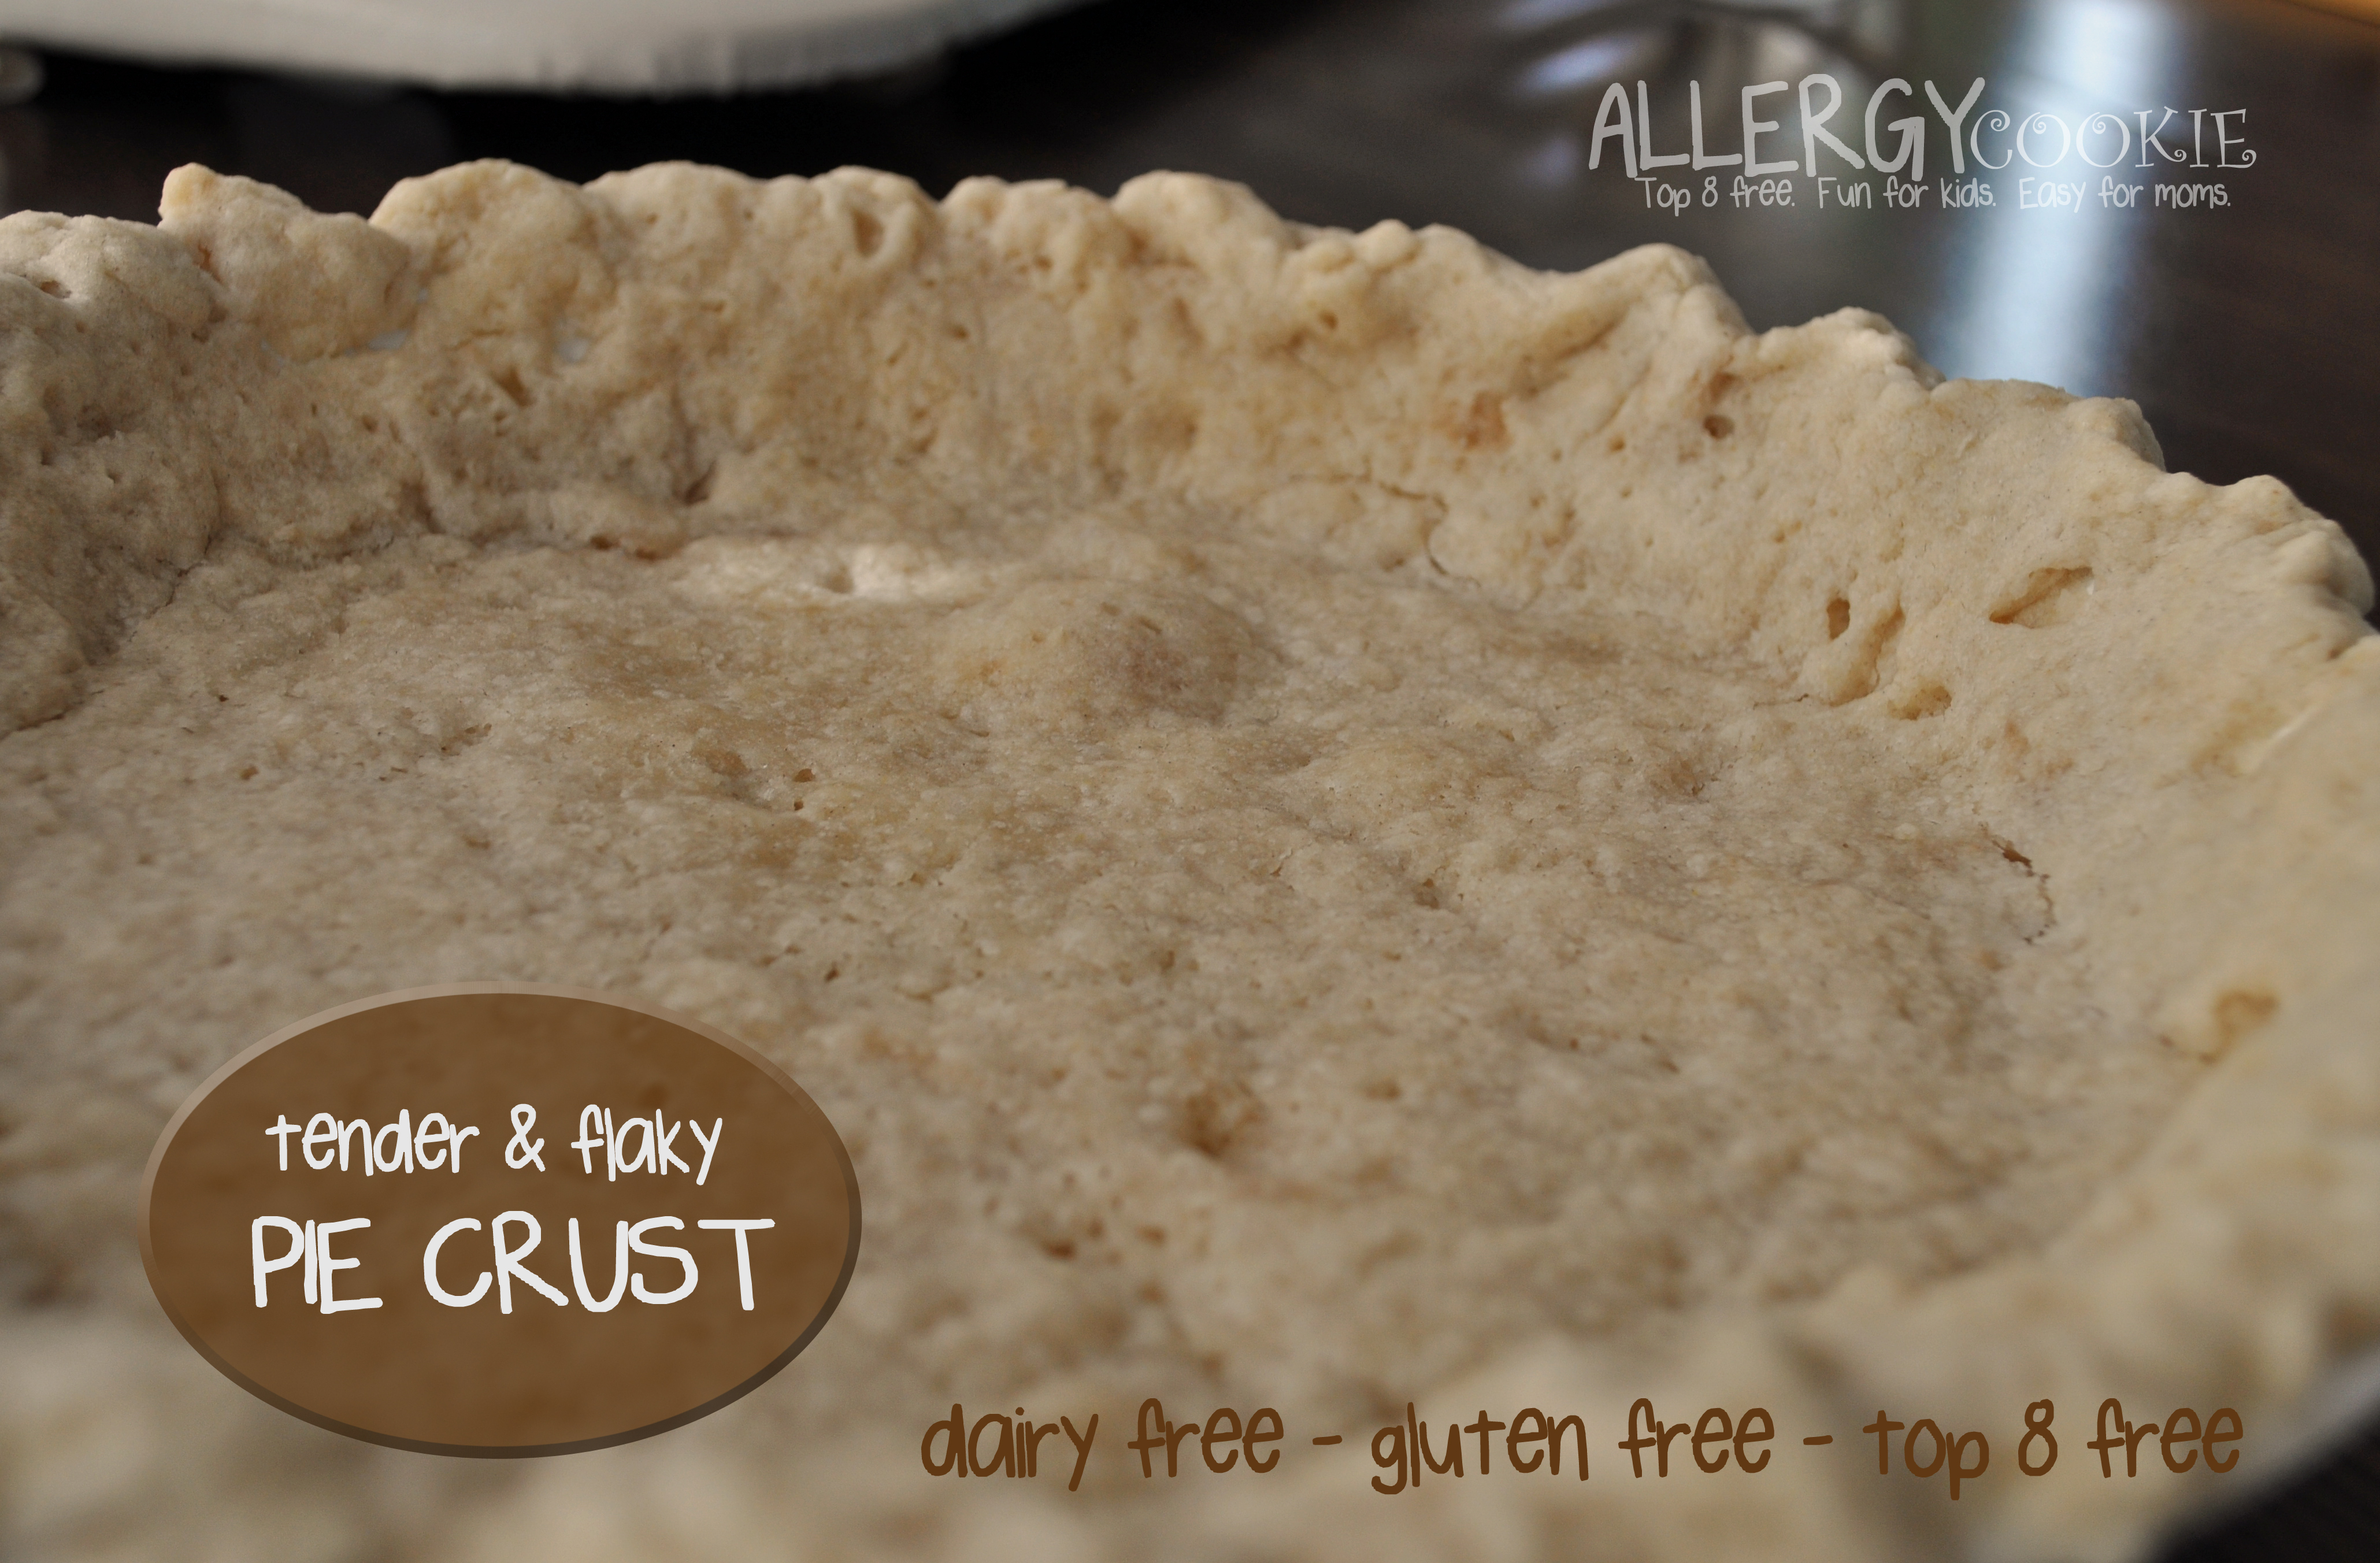 The Perfect Pie Crust (gluten free, vegan, top 8 free)